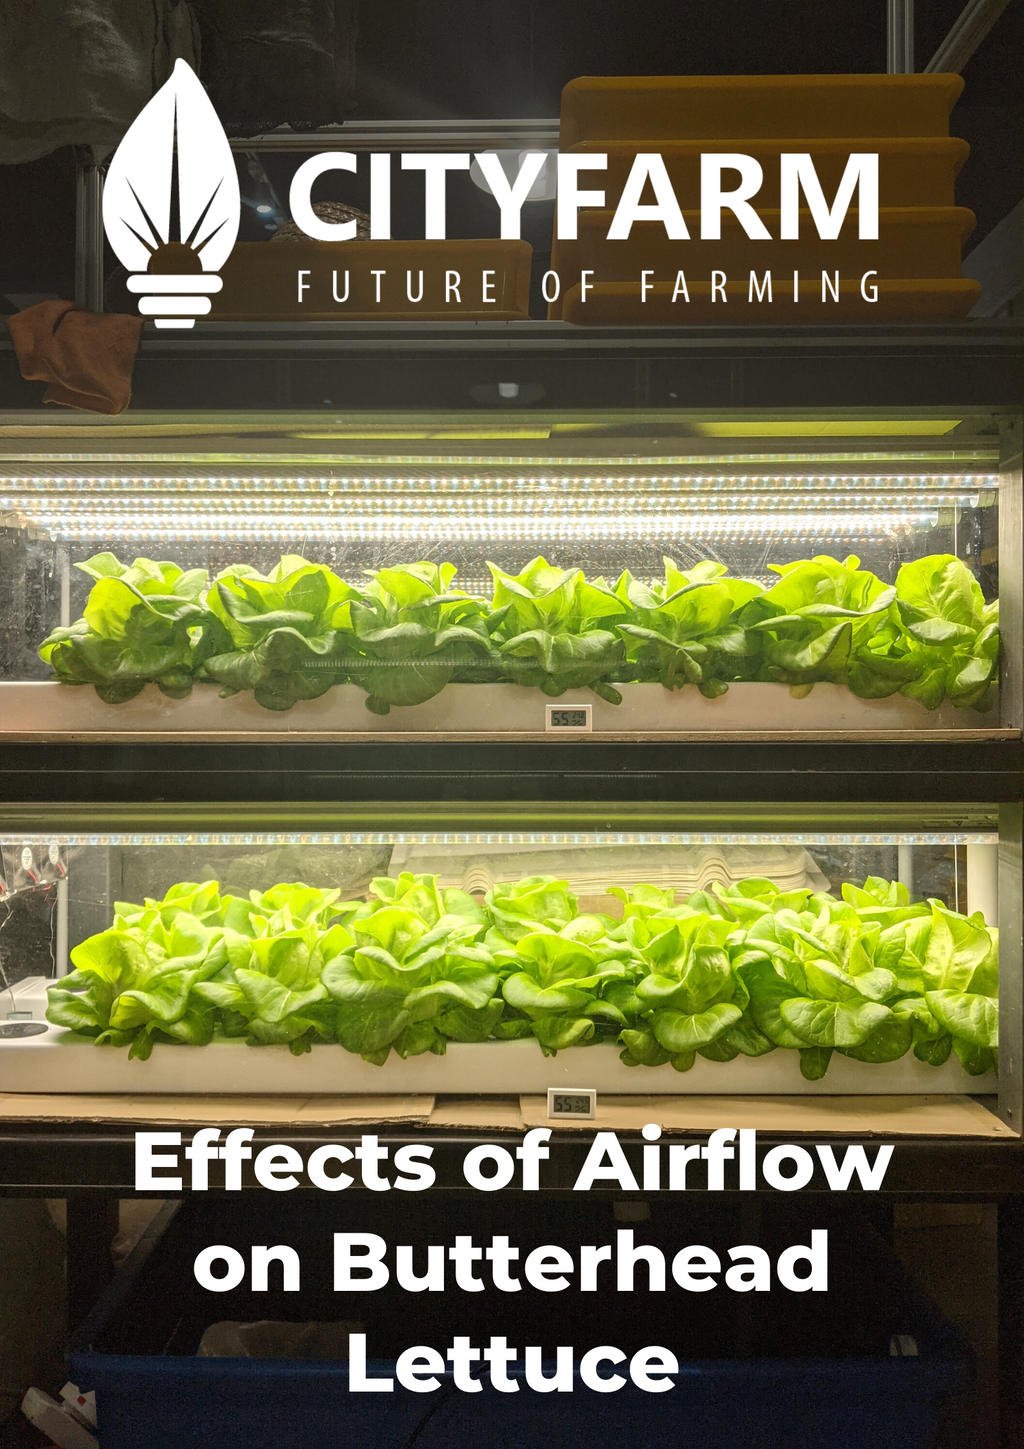 [Research] Effects of Airflow on Butterhead Lettuce